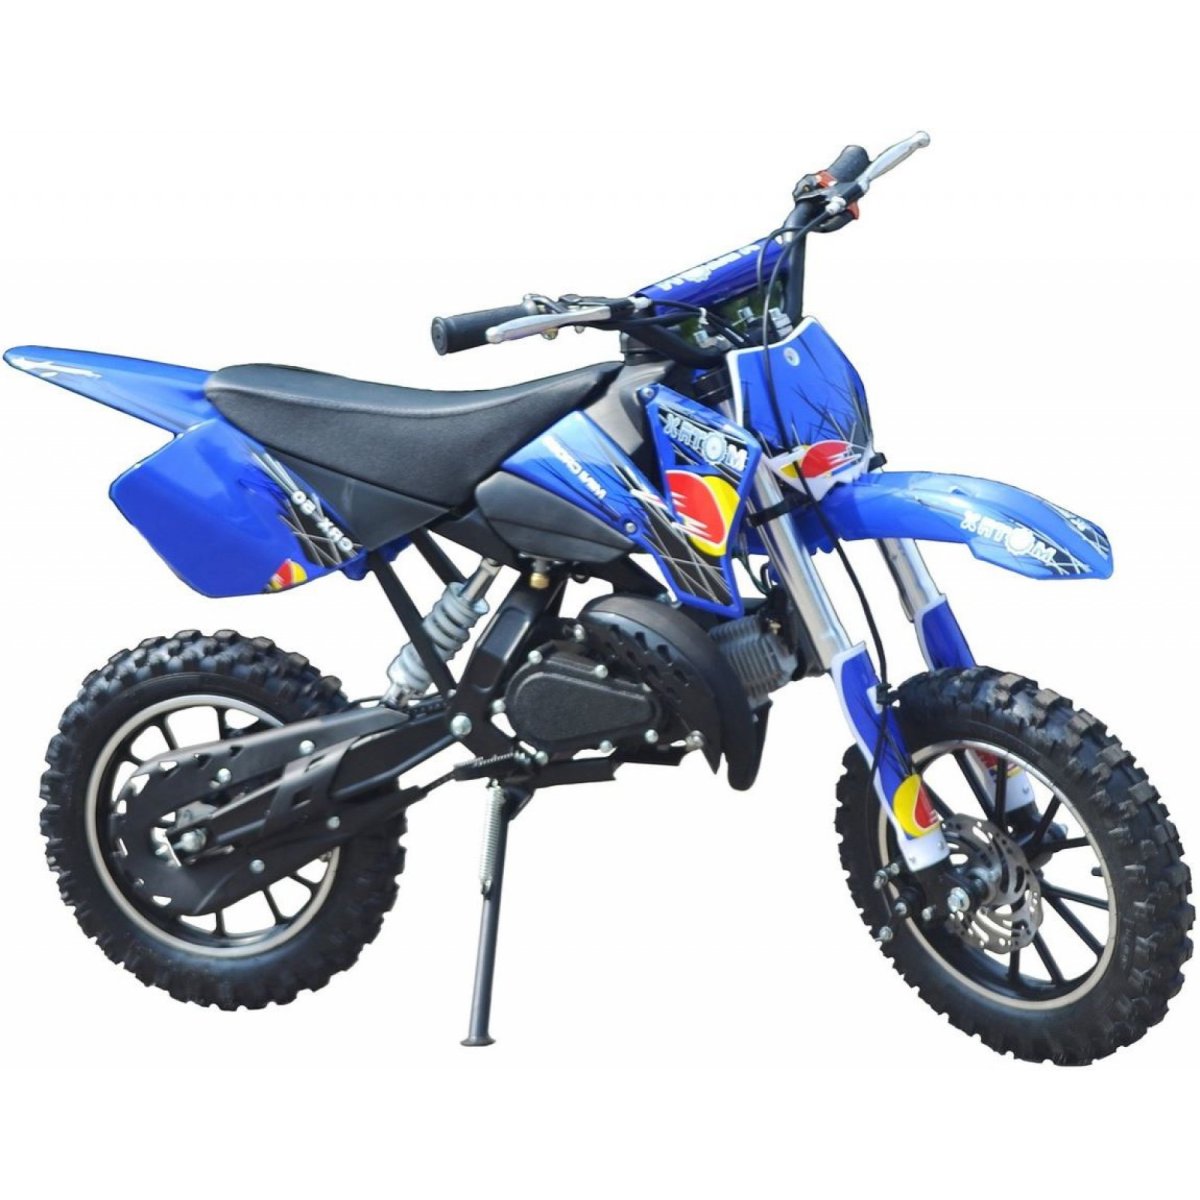 MOTAX мотоцикл мини кросс 50cc